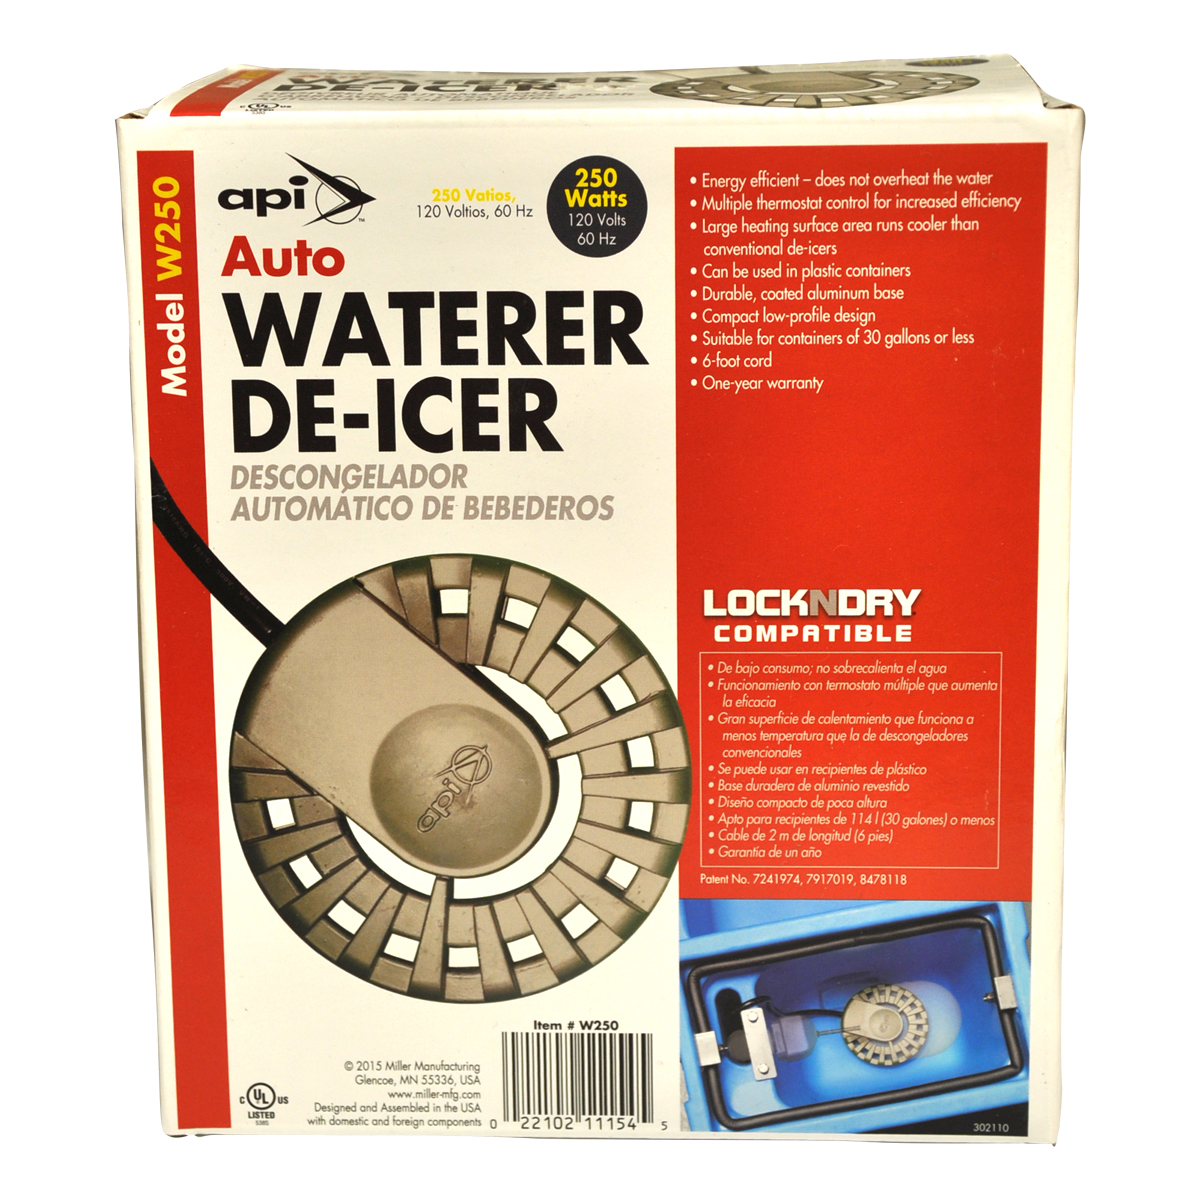 Auto Waterer De-Icer - 250W - 120V